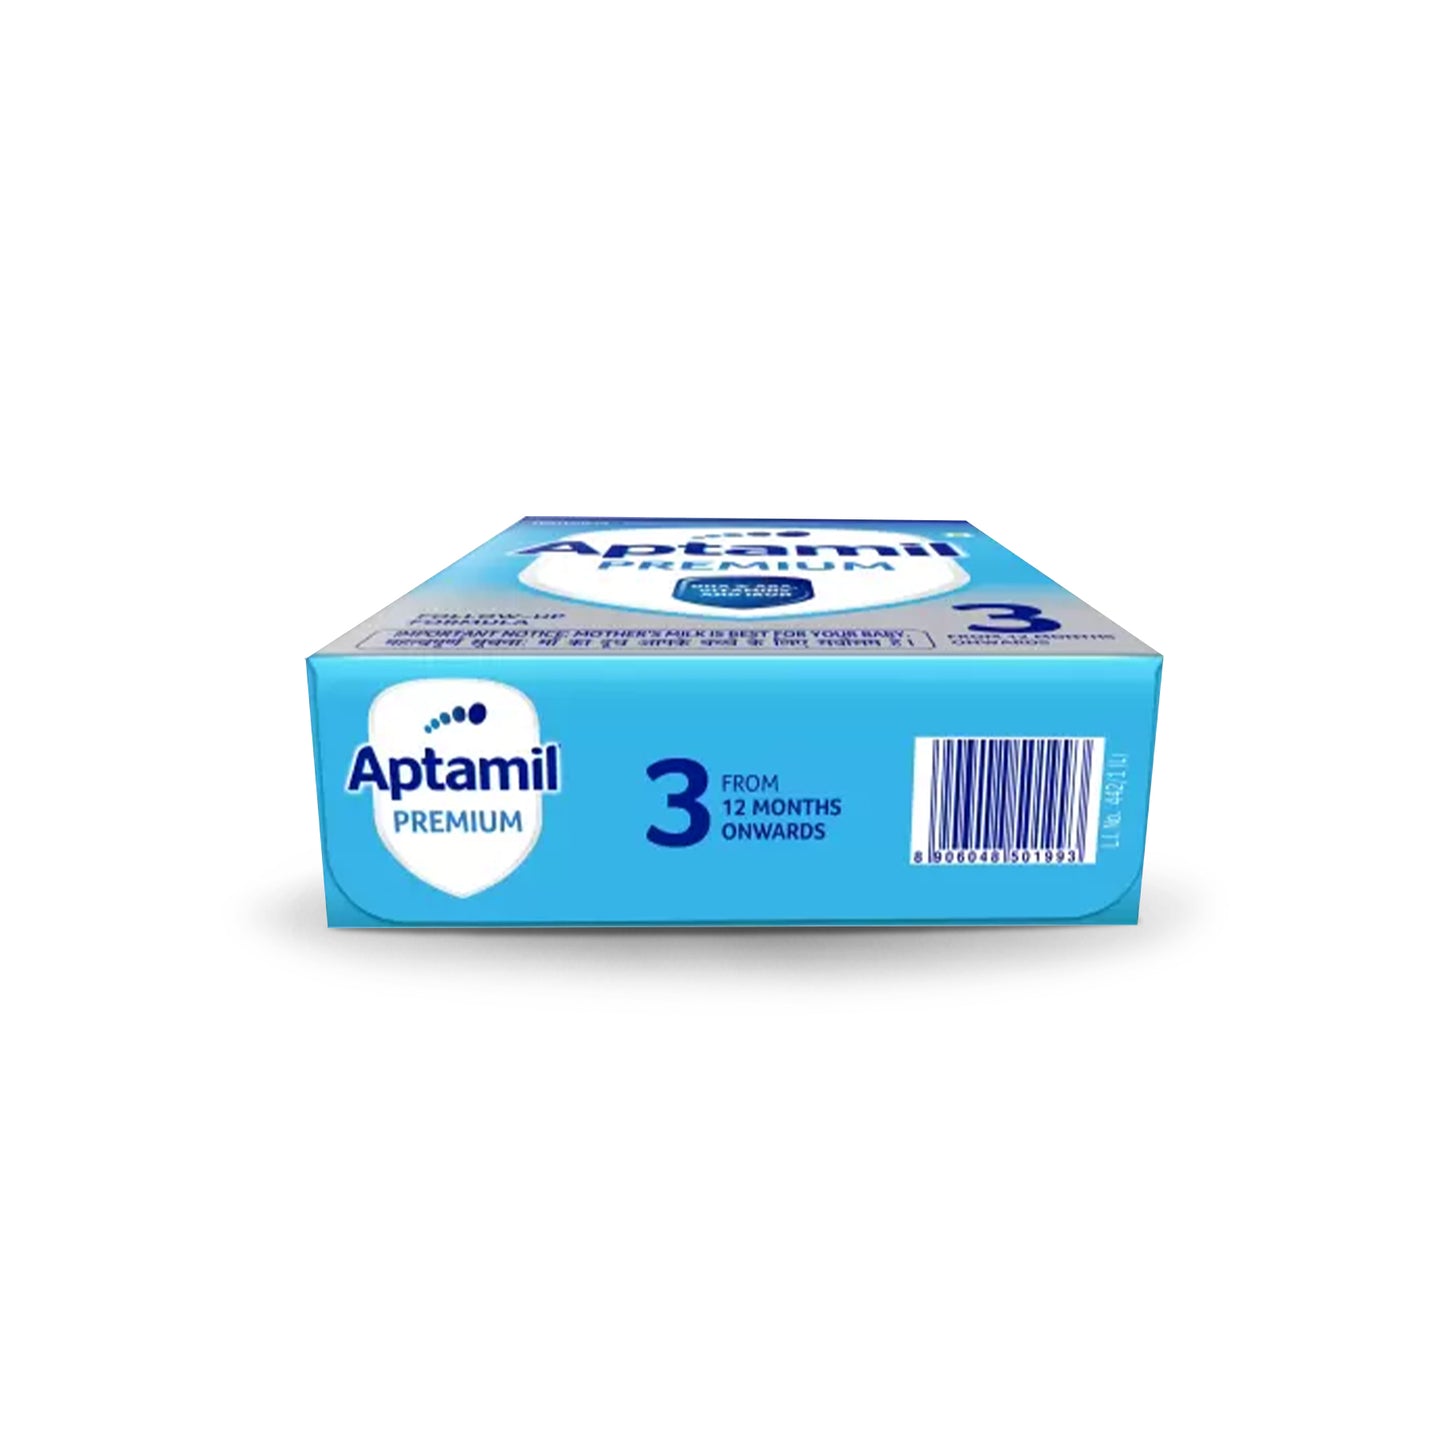 Aptamil Premium 3 Follow-Up Formula From 12 Months Onwards - Refill, 400gm